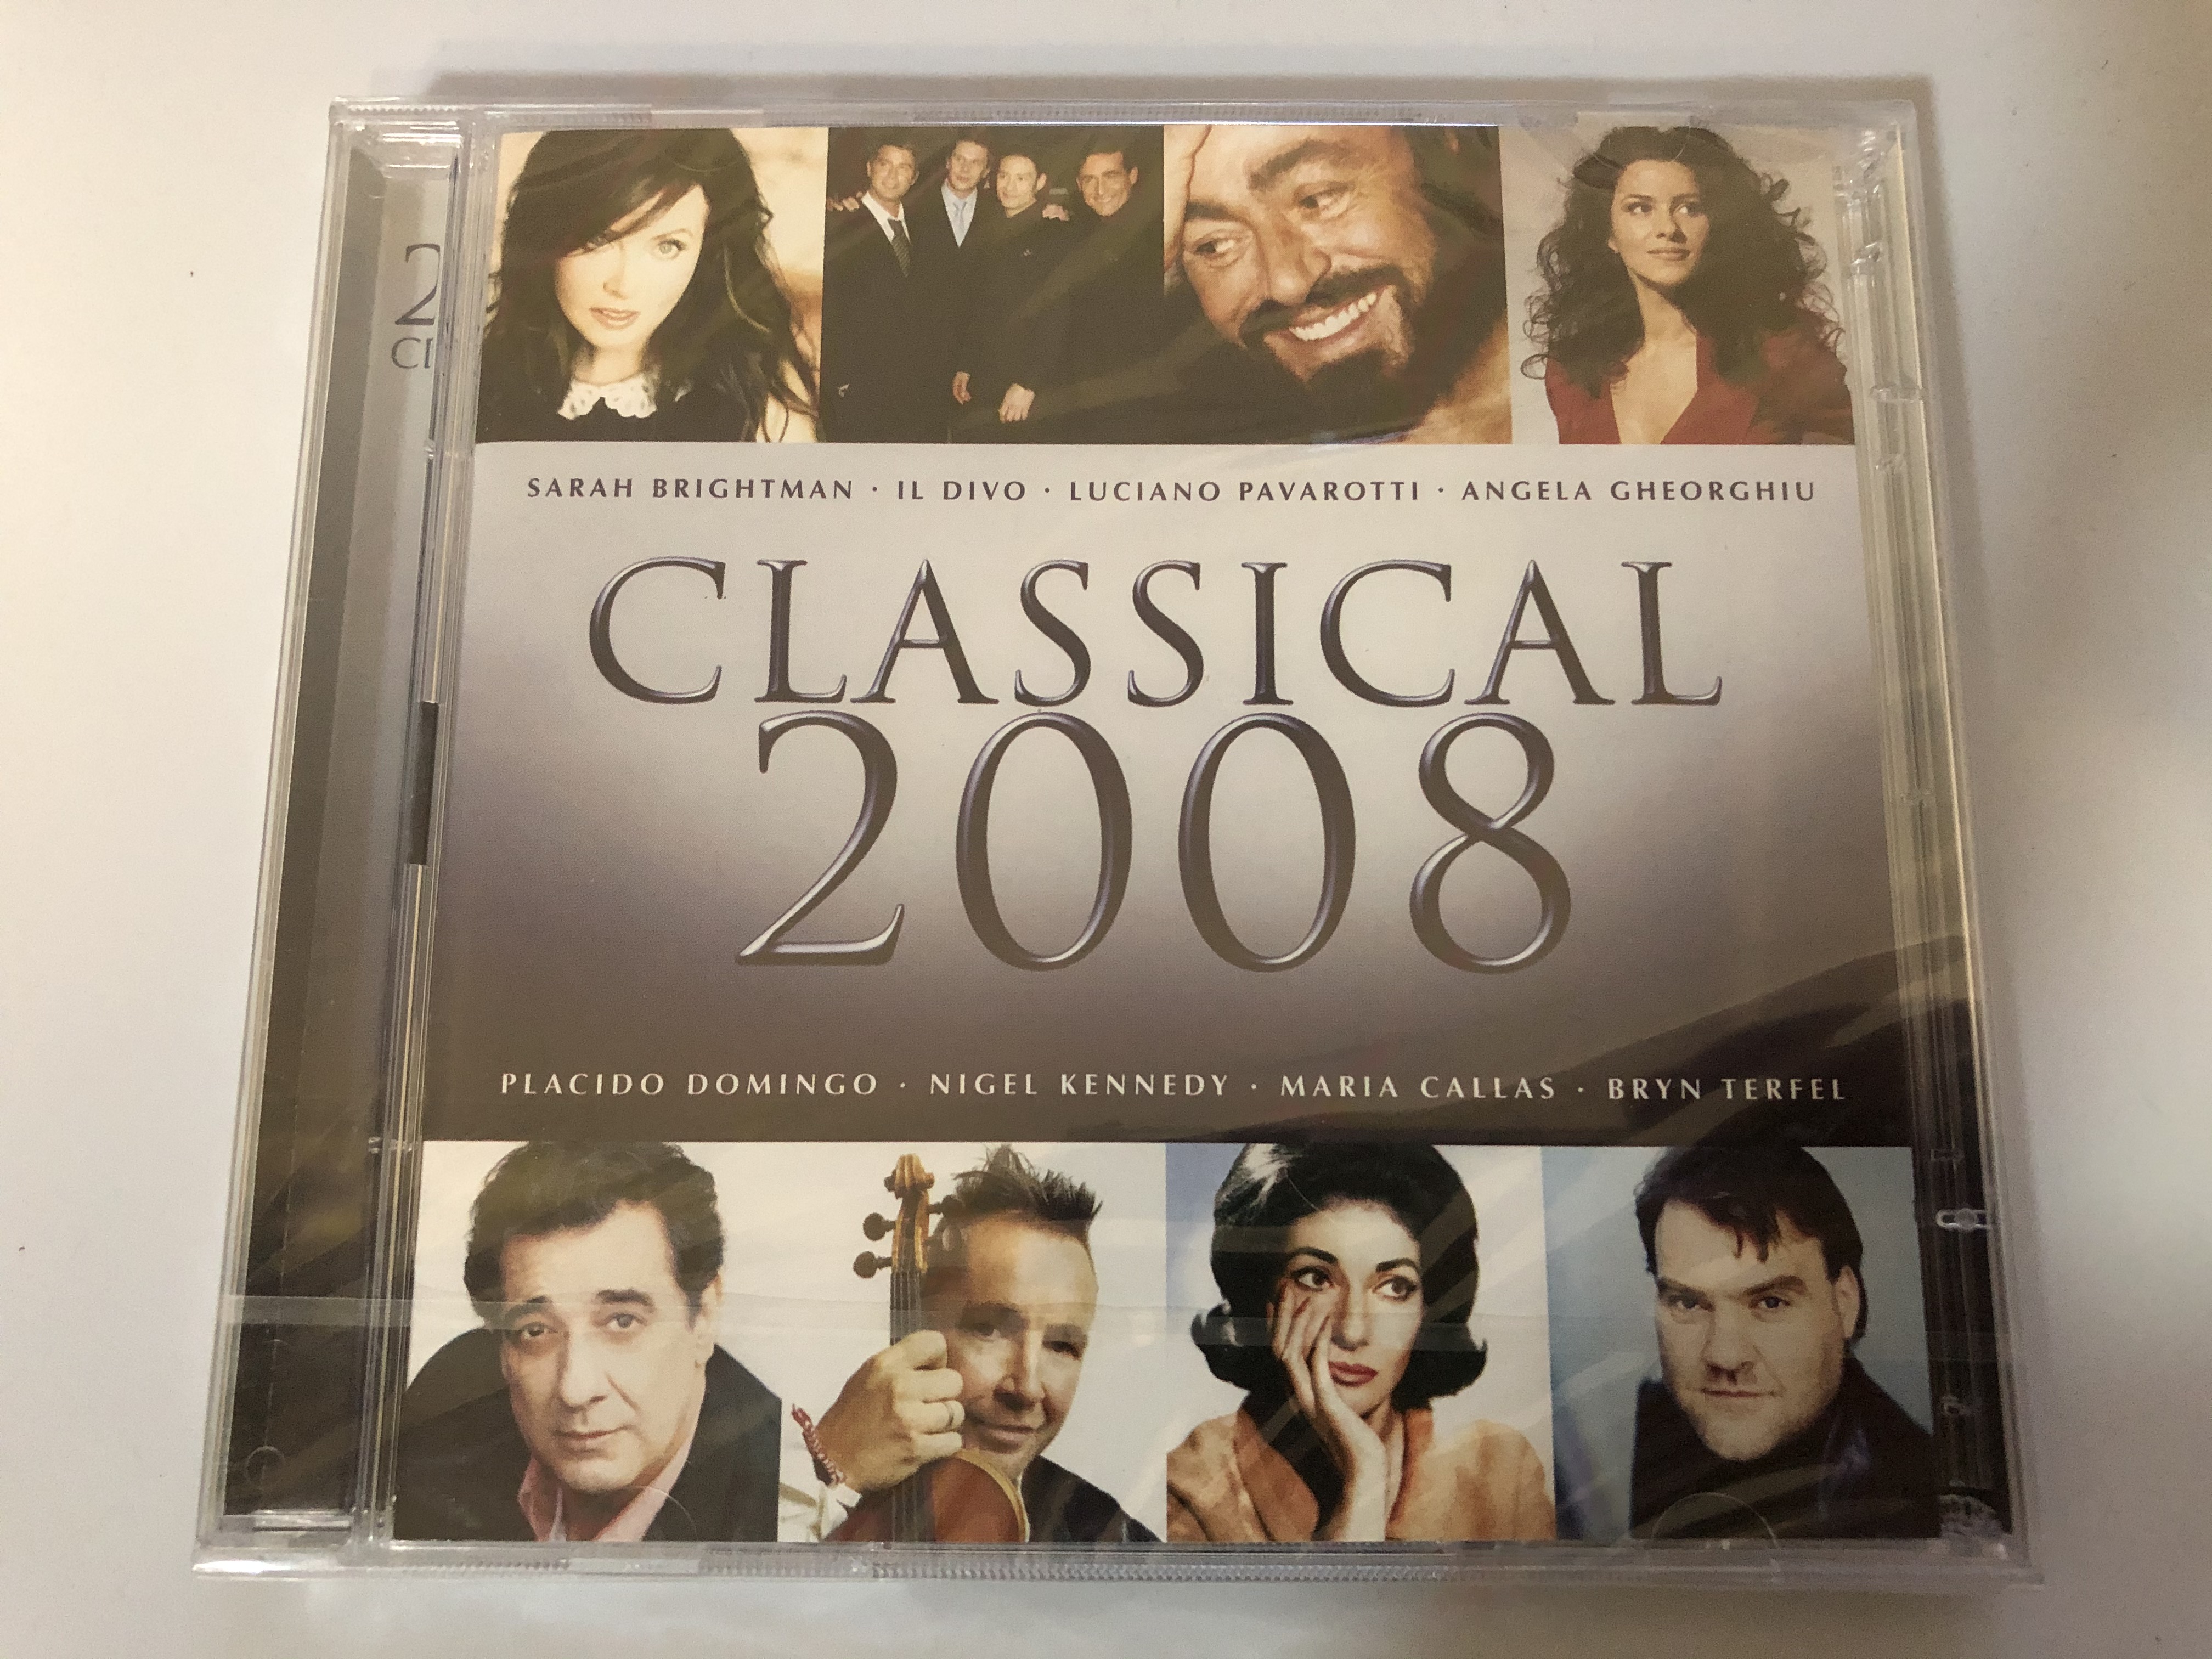 classical-2008-sarah-brightman-il-divo-luciano-pavarotti-angela-gheorghiu-placido-domingo-nigel-kennedy-maria-callas-bryn-terfel-emi-classics-2x-audio-cd-2007-stereo-5099951056827-1-.jpg